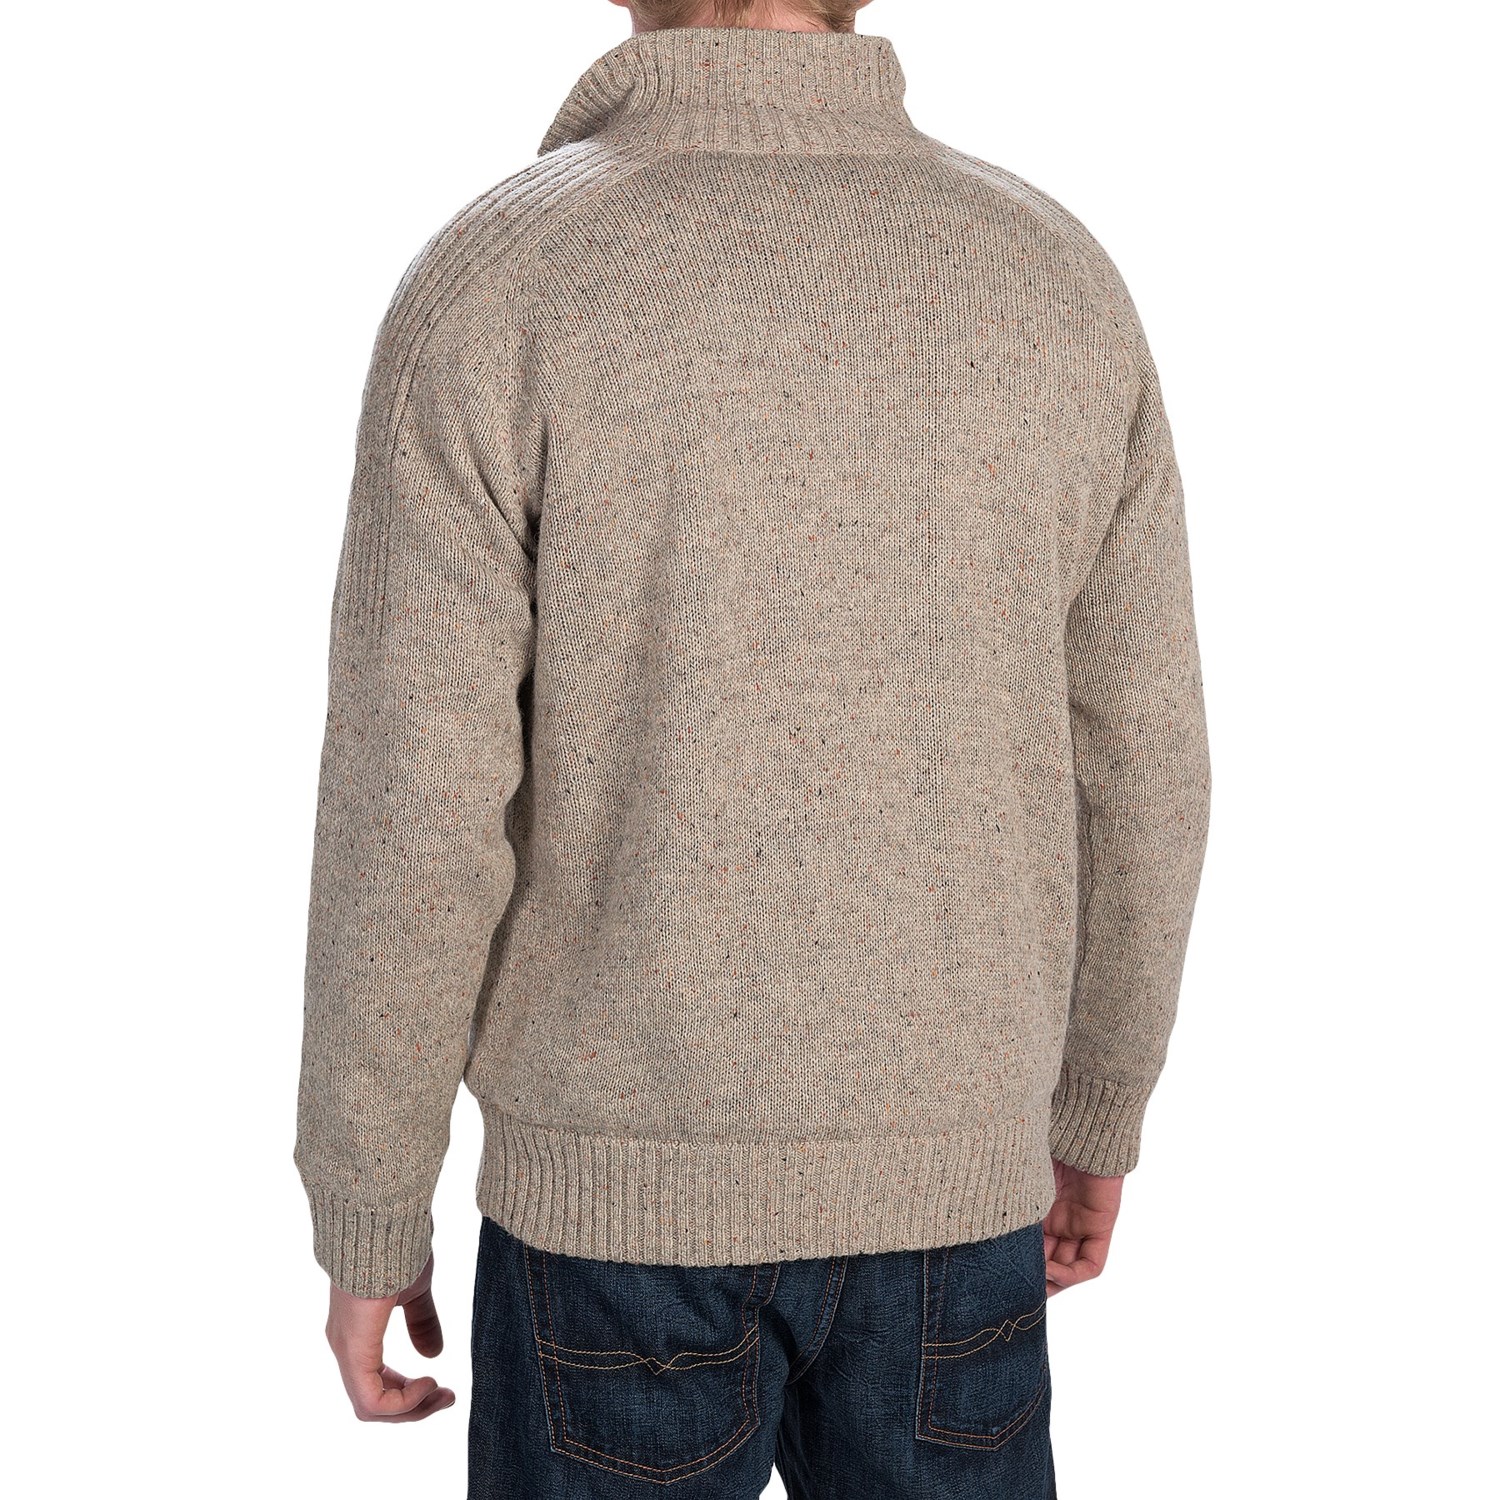 Weatherproof Sweater Jacket (For Men) 9344W - Save 80%